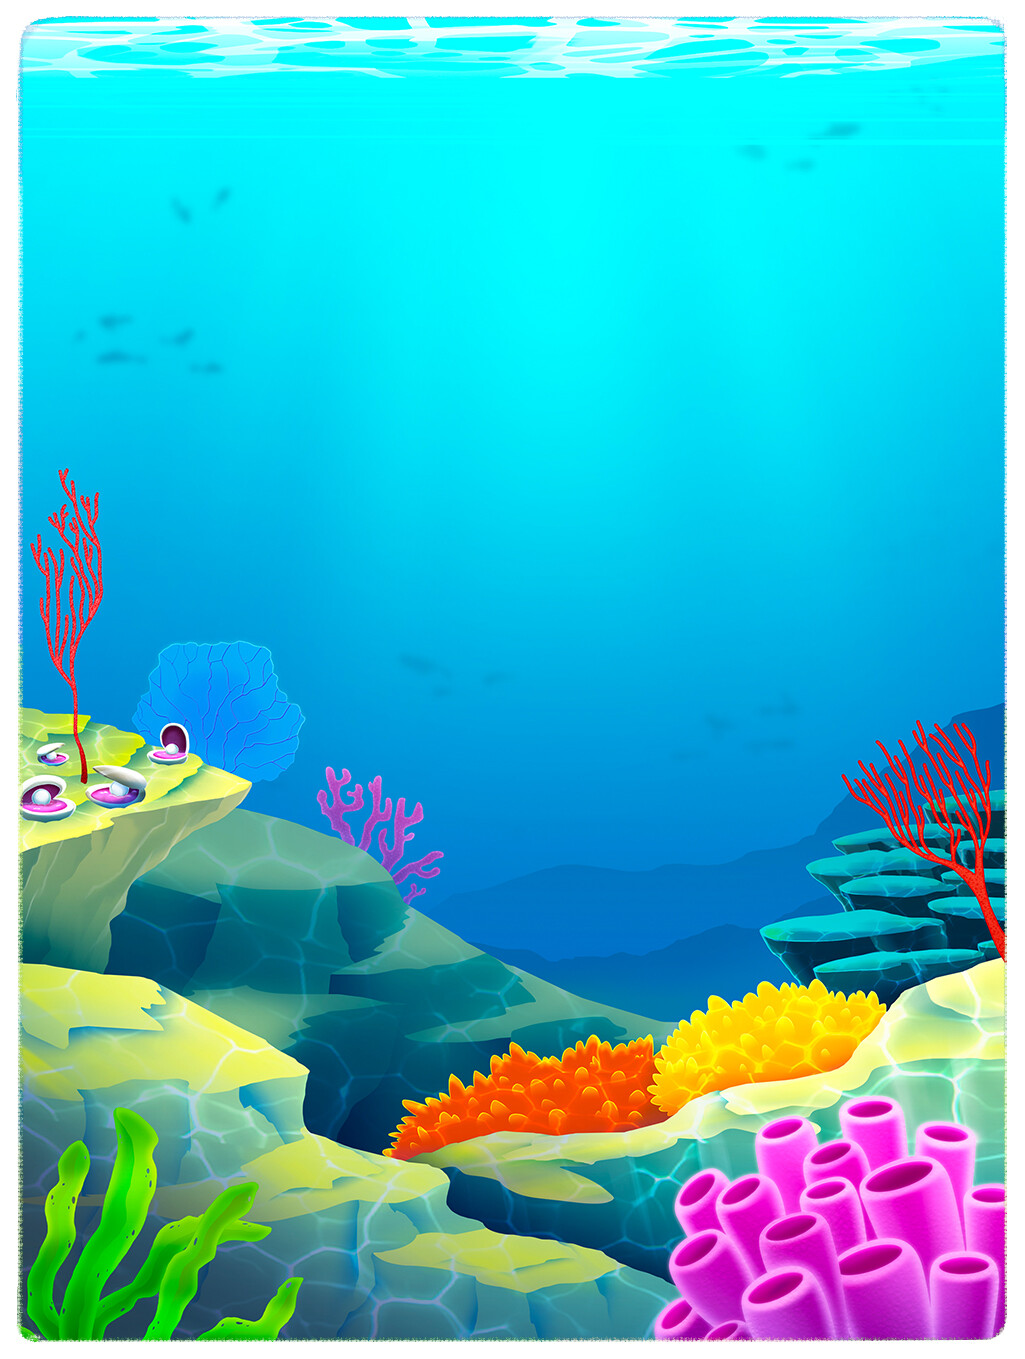 Under The Sea Theme | BG